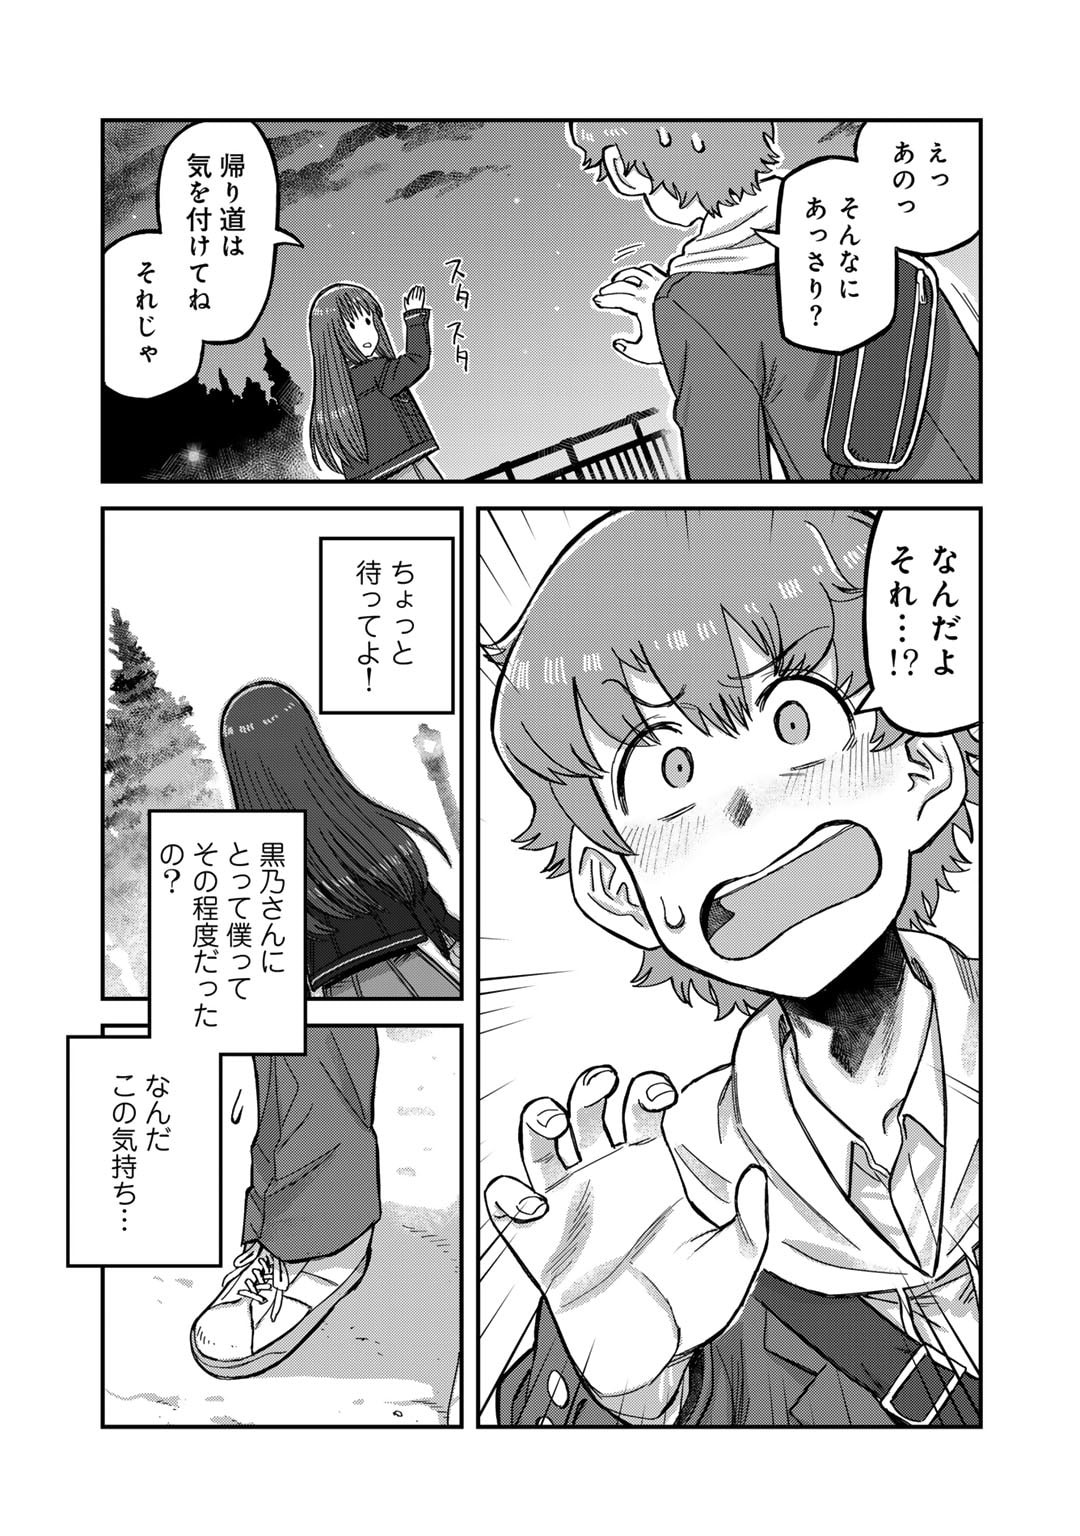 Kurono-san wa Occult ga Suki! - Chapter 5 - Page 17